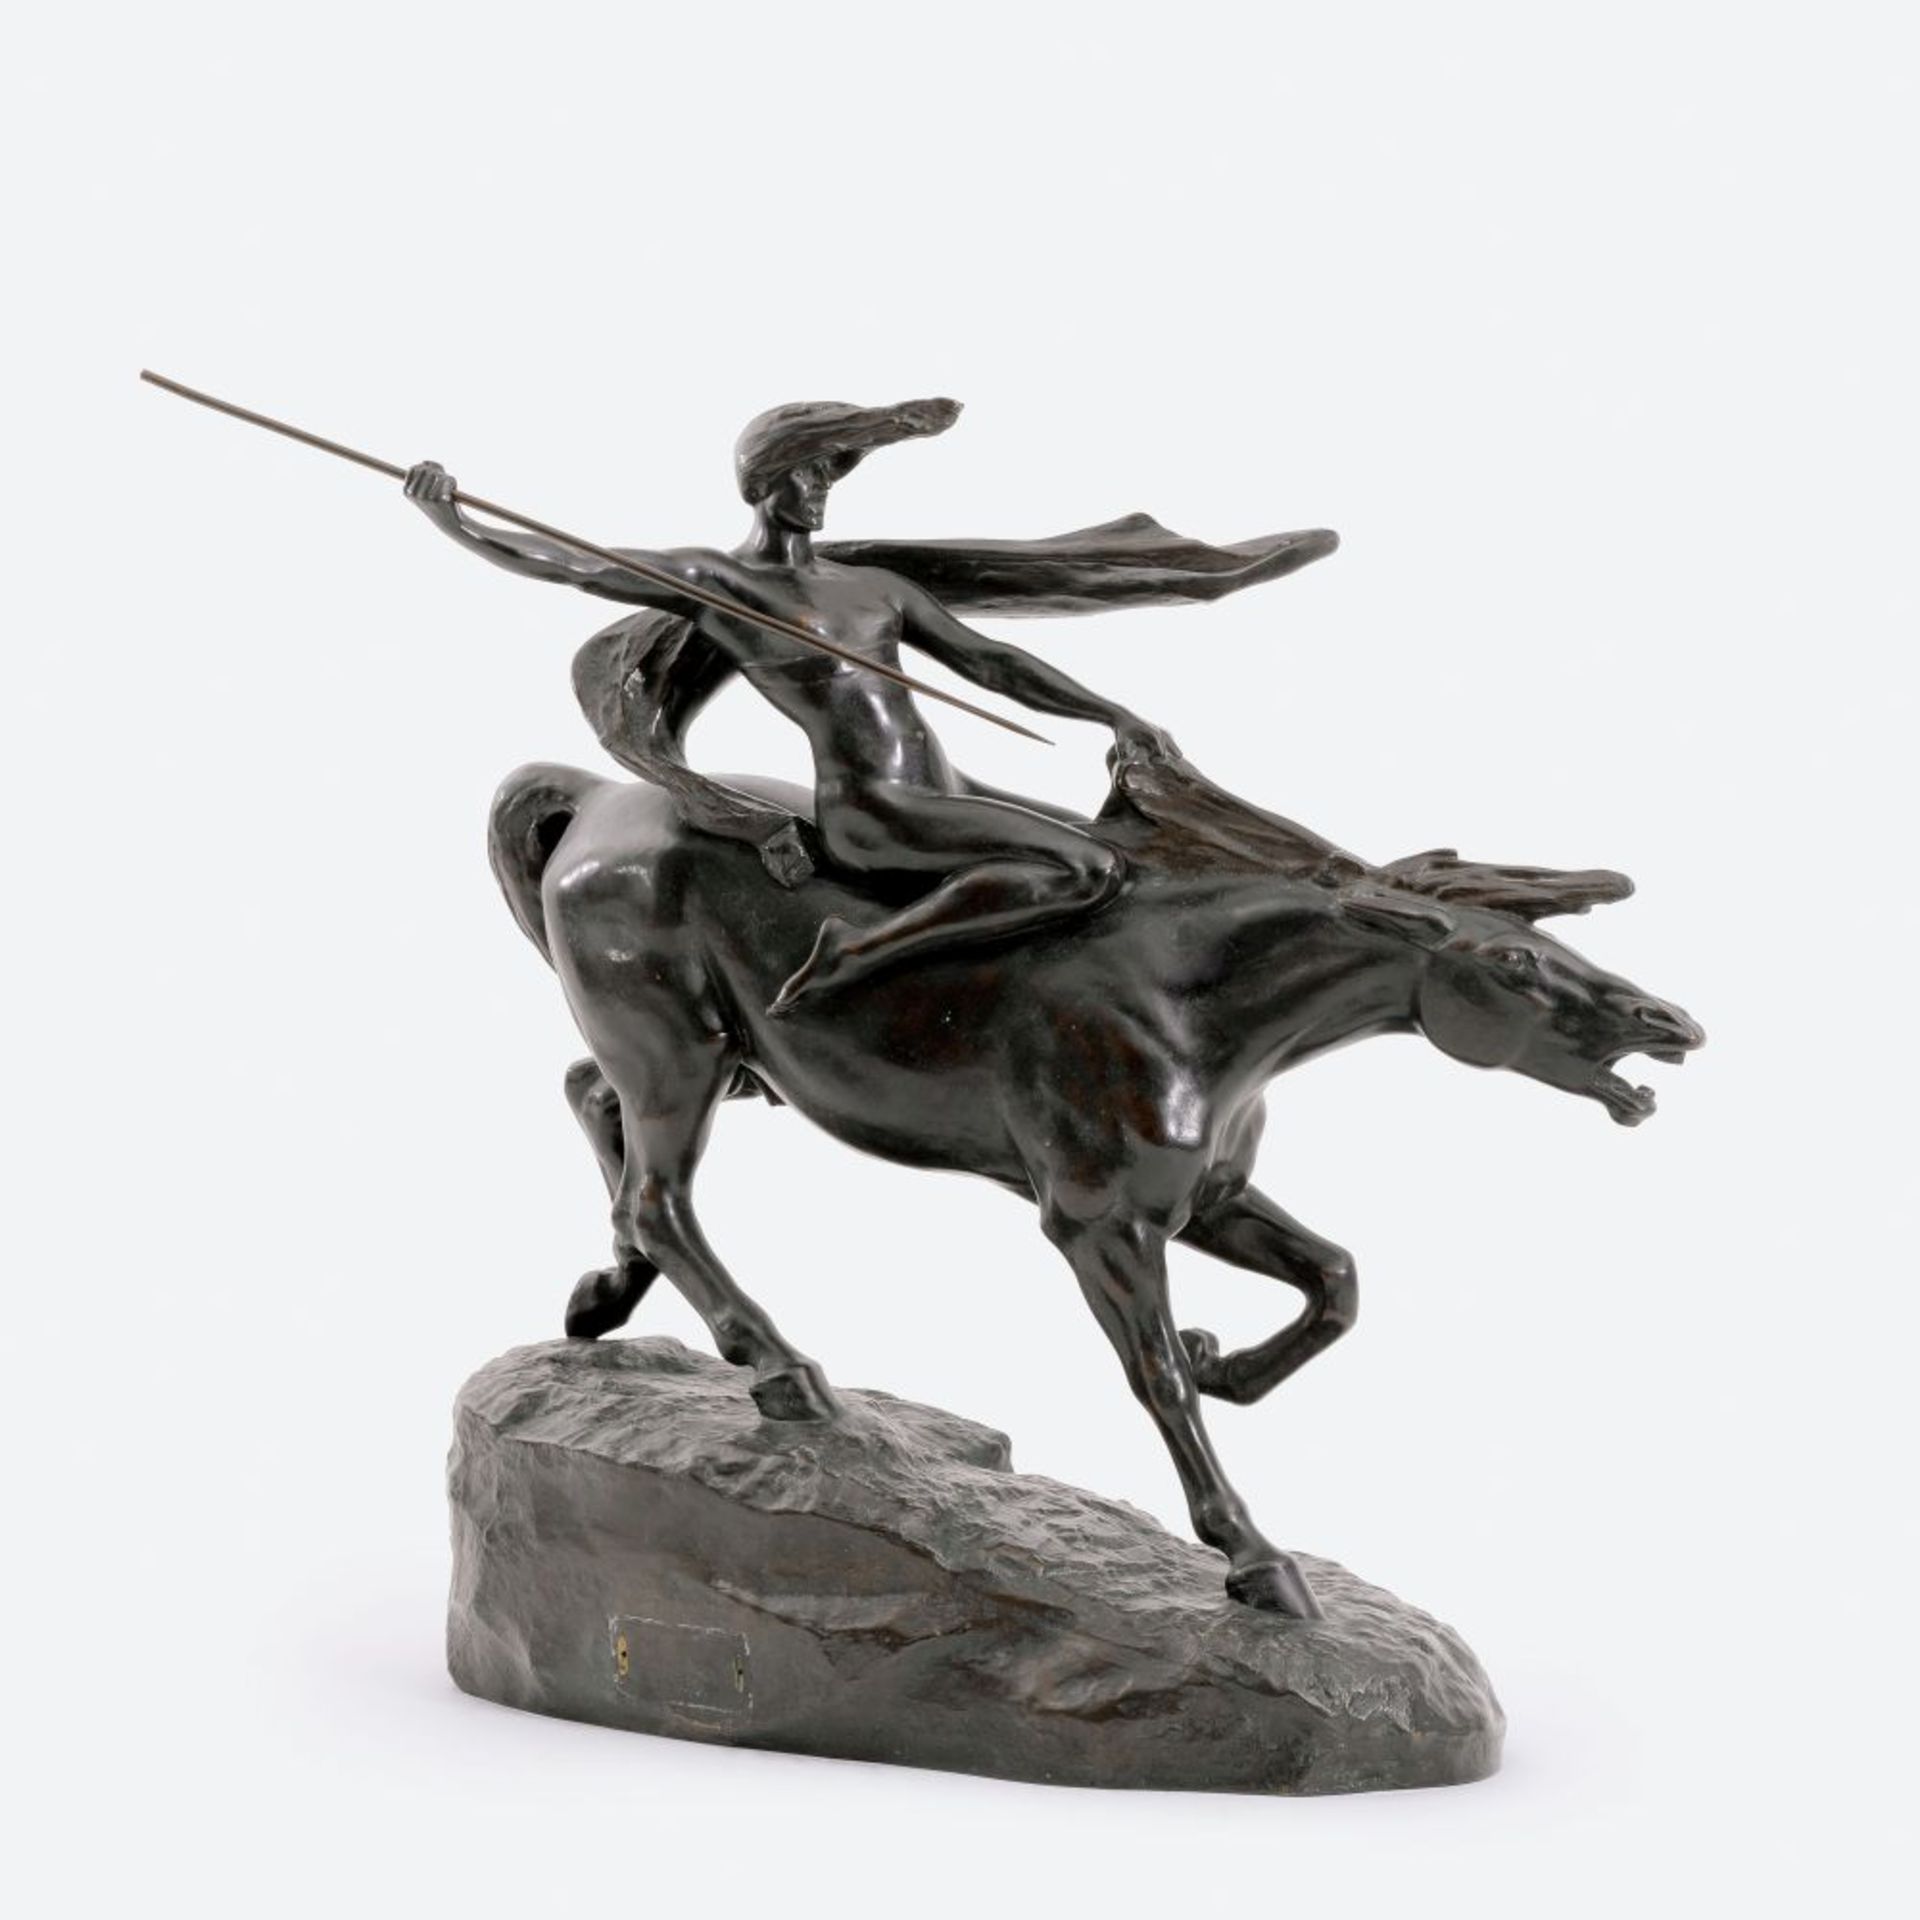 Sinding, Stephan Abel (Trondheim 1846 - Paris 1922). A Spear-throwing Amazon.